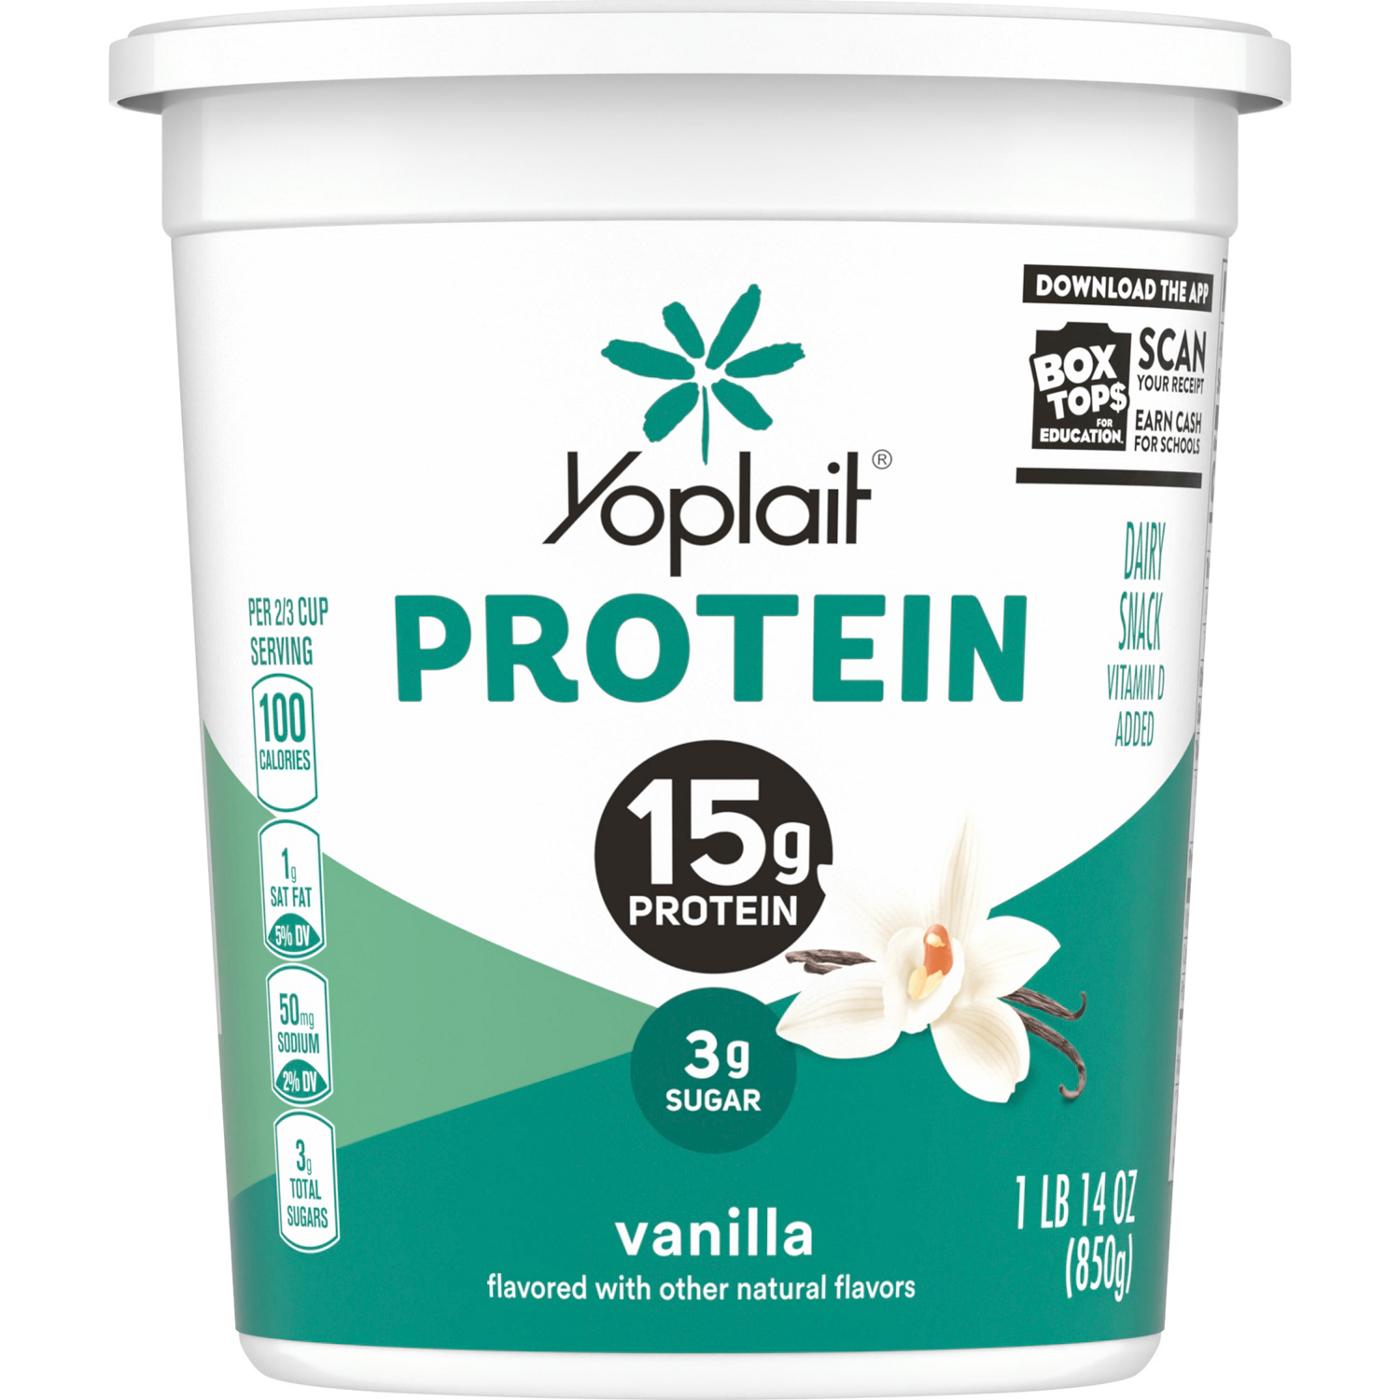 Yoplait Protein Yogurt - Vanilla; image 1 of 6